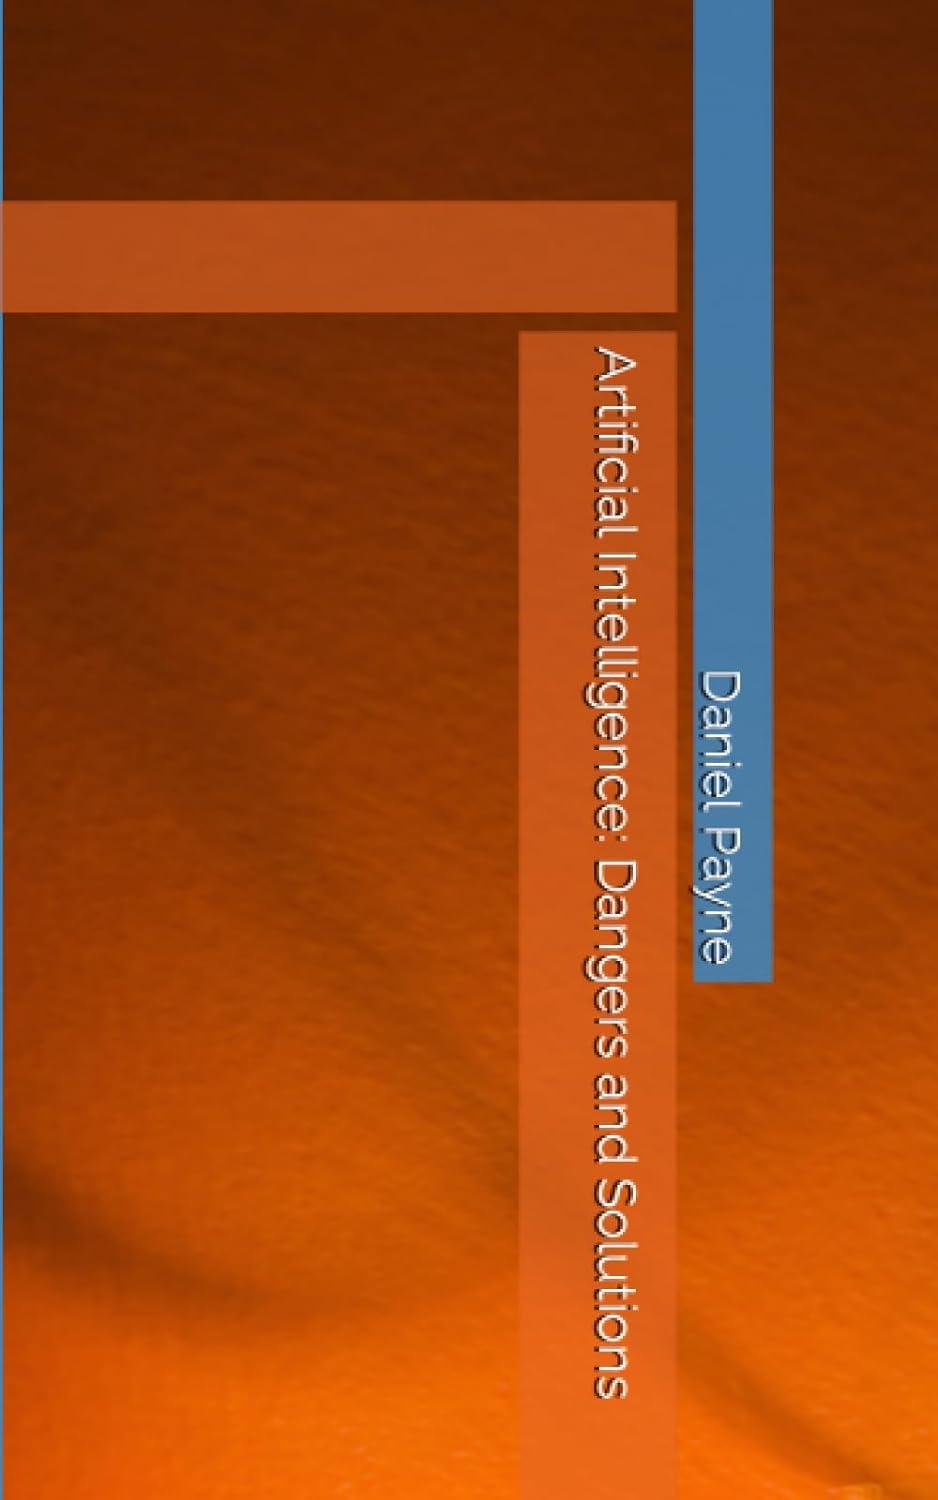 artificial intelligence dangers and solutions 1st edition daniel payne b0cfddldq5, 979-8857221242